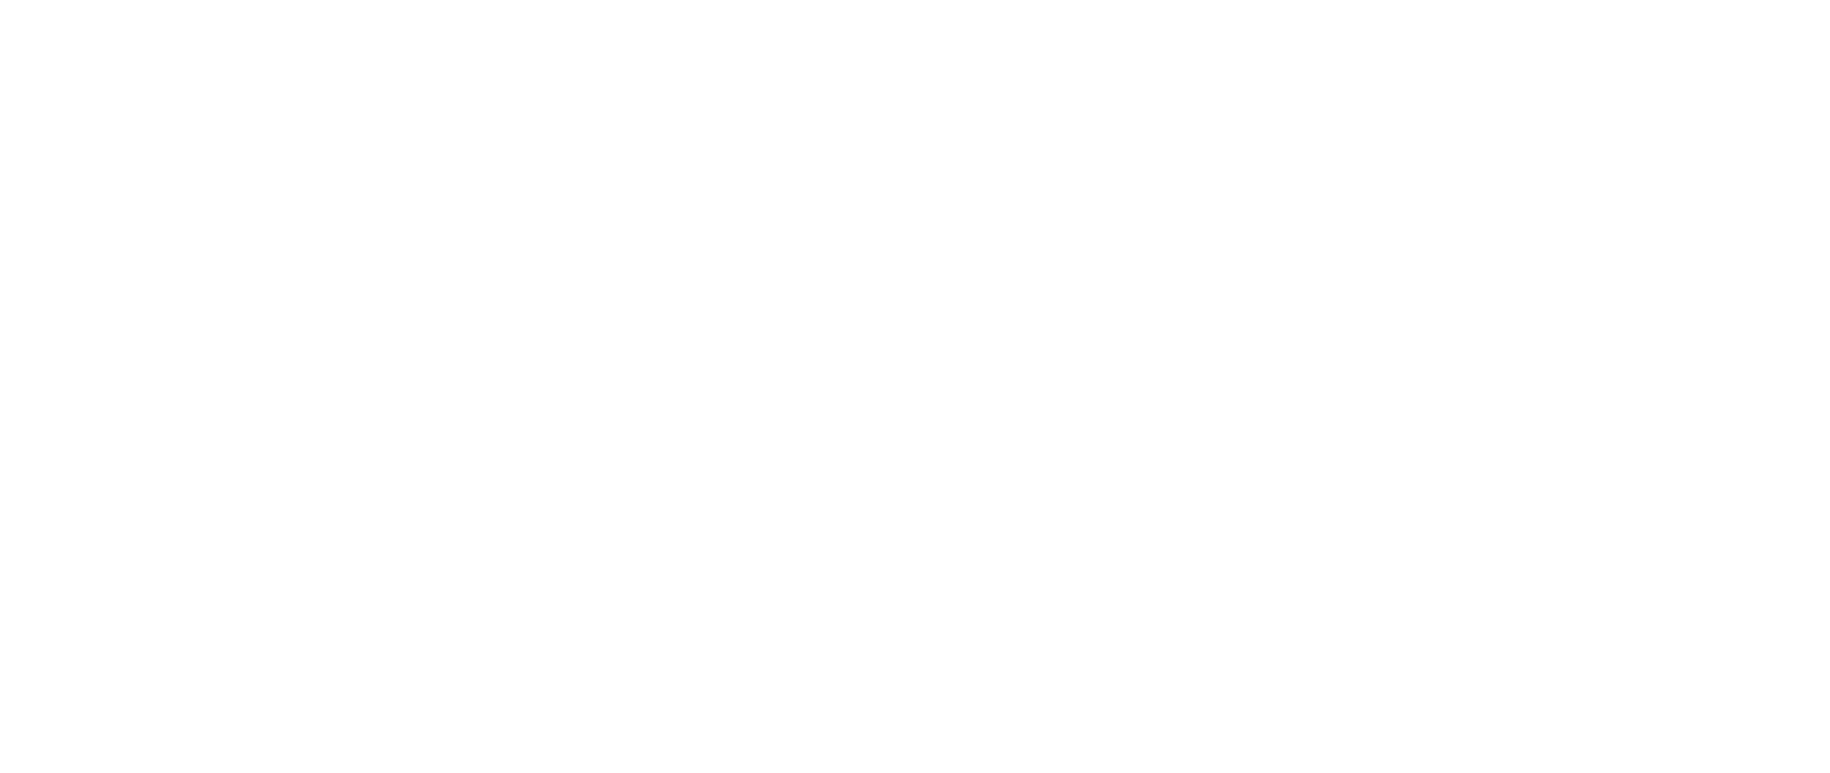 Mind Foundry 